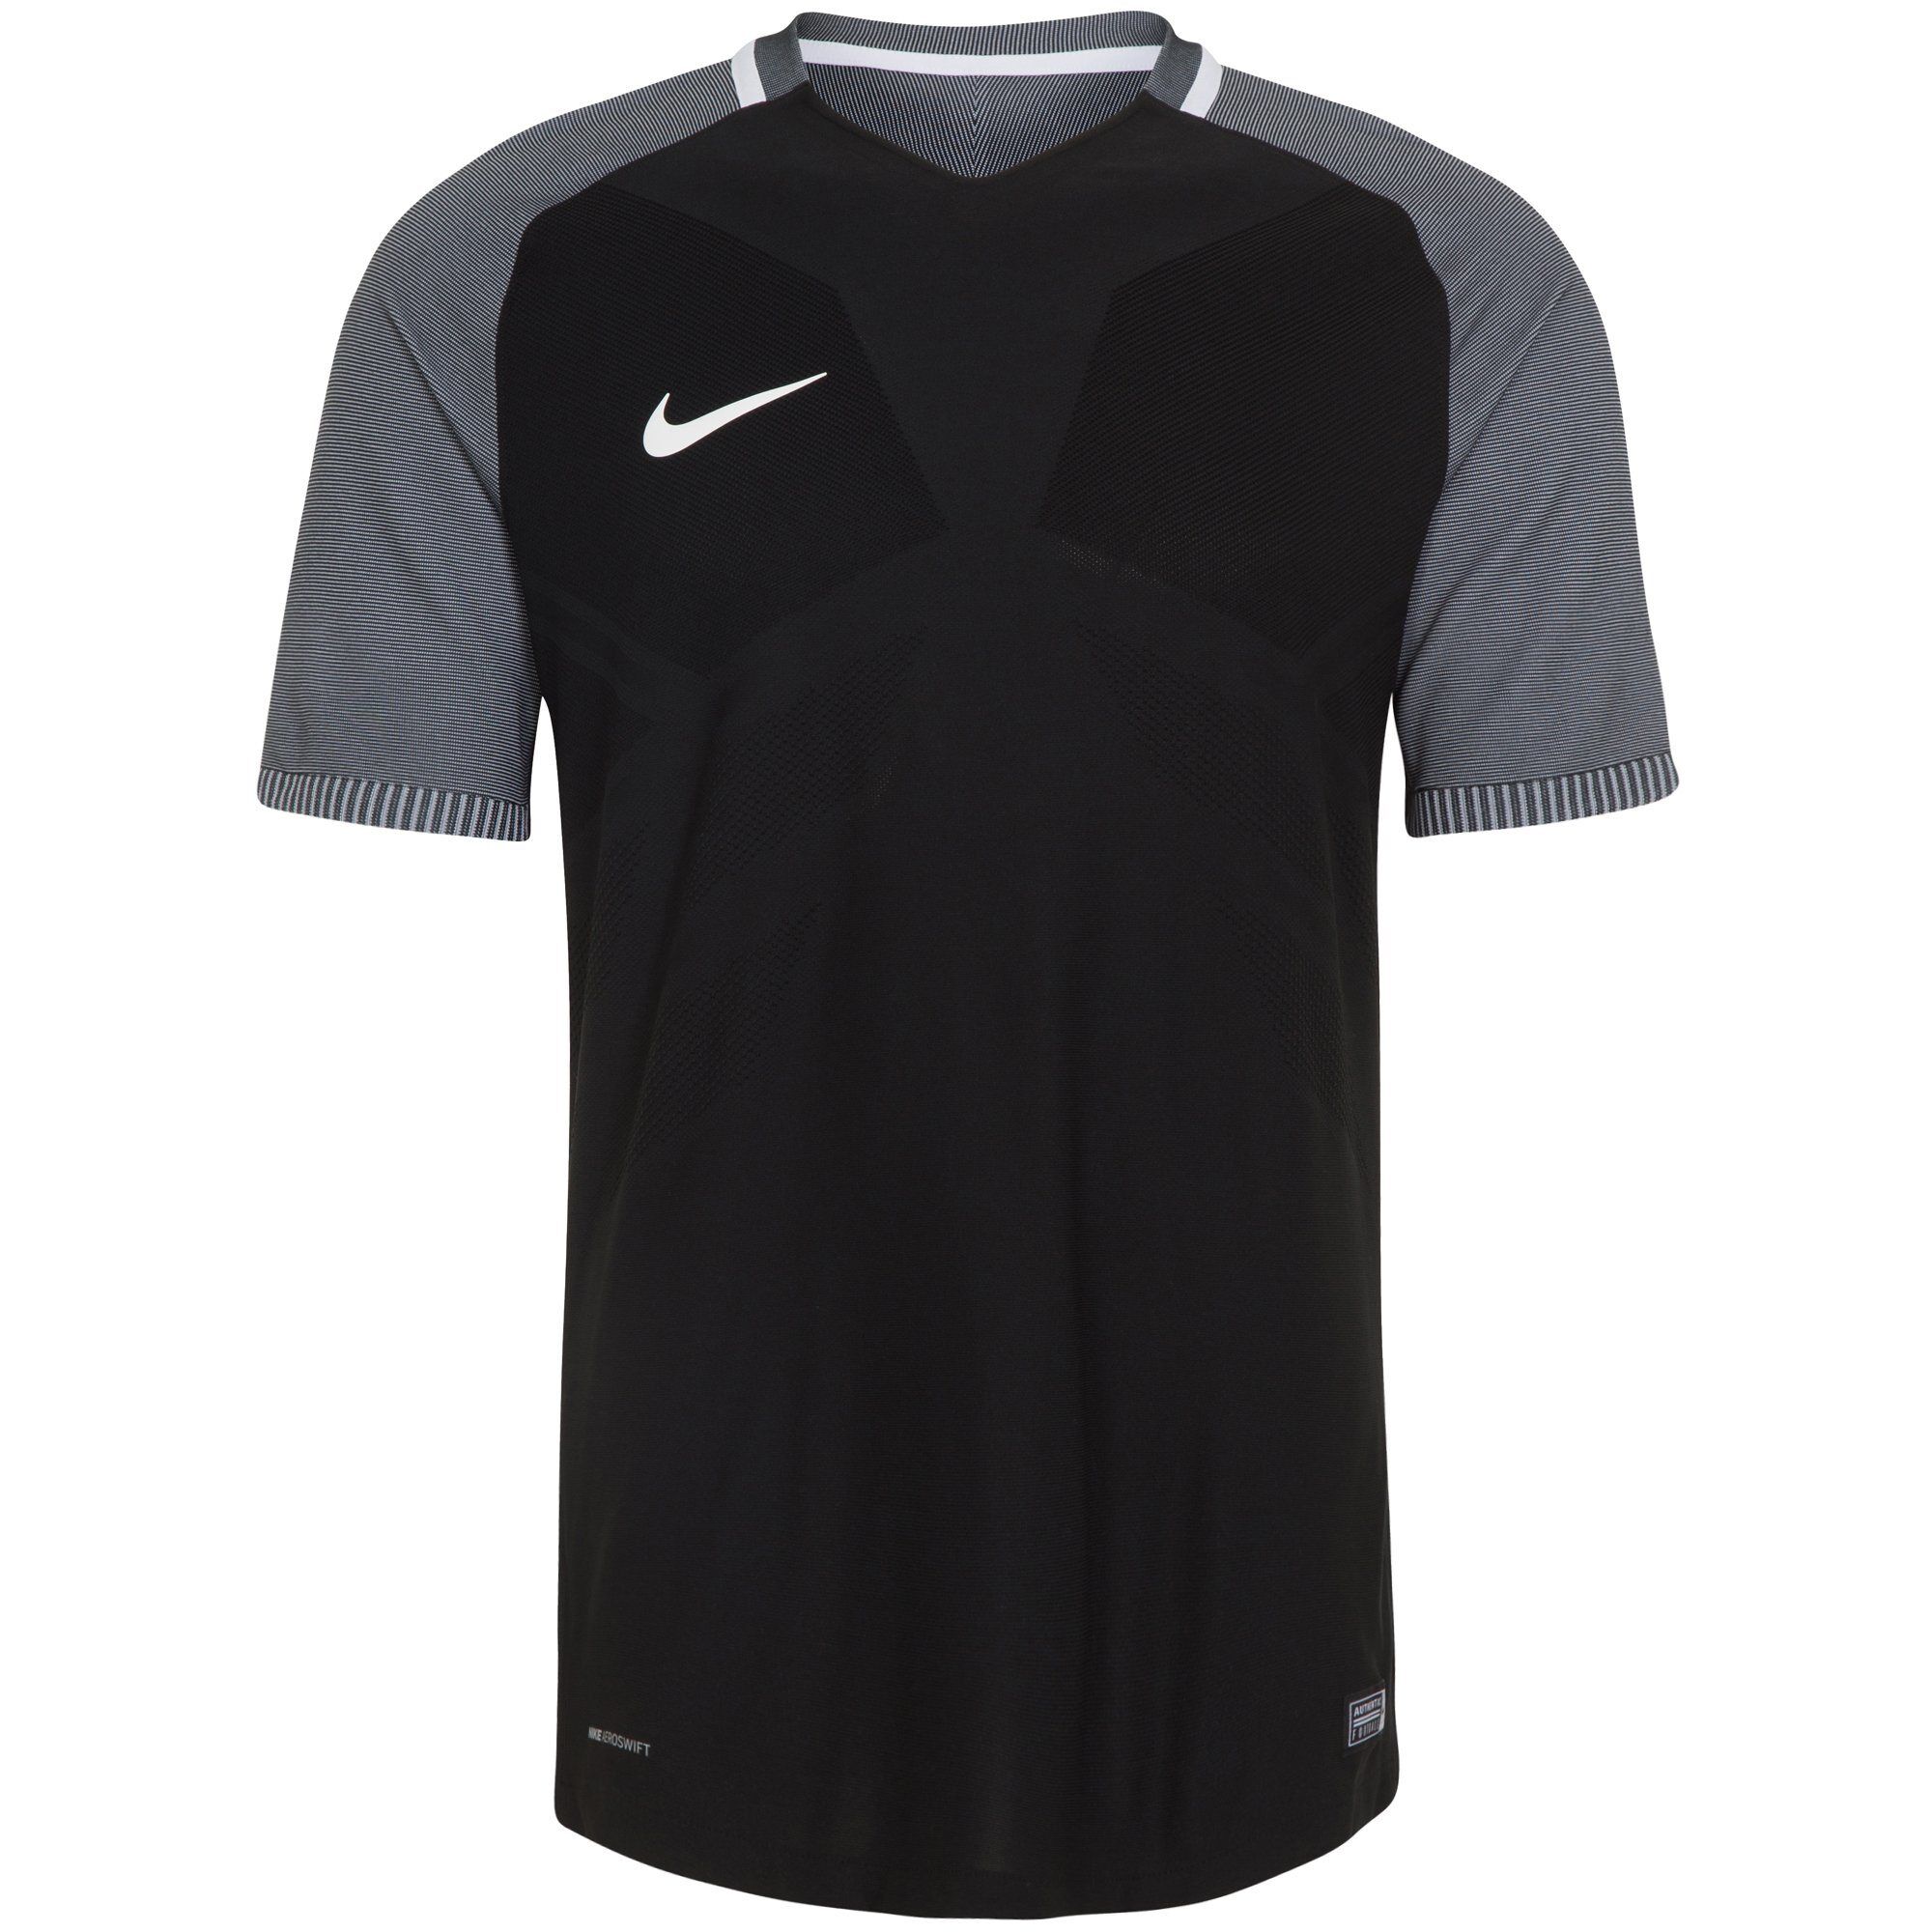 Nike Fußballtrikot »Vapor I«, schwarz-weiß